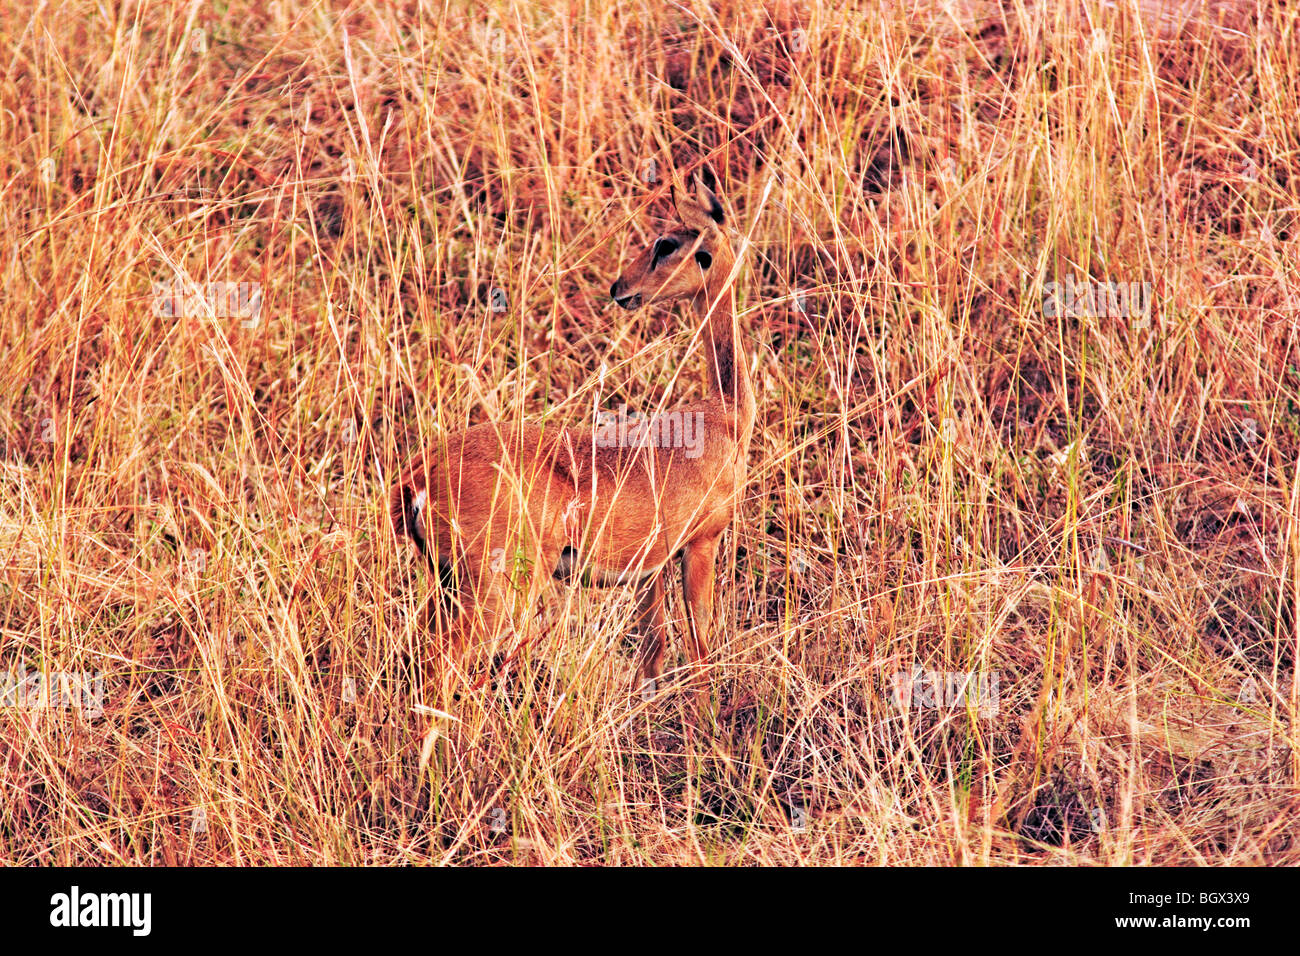 Oribi antelope (Ourebia ourebi), Murchison Falls Conservation Area, Uganda, Africa Stock Photo